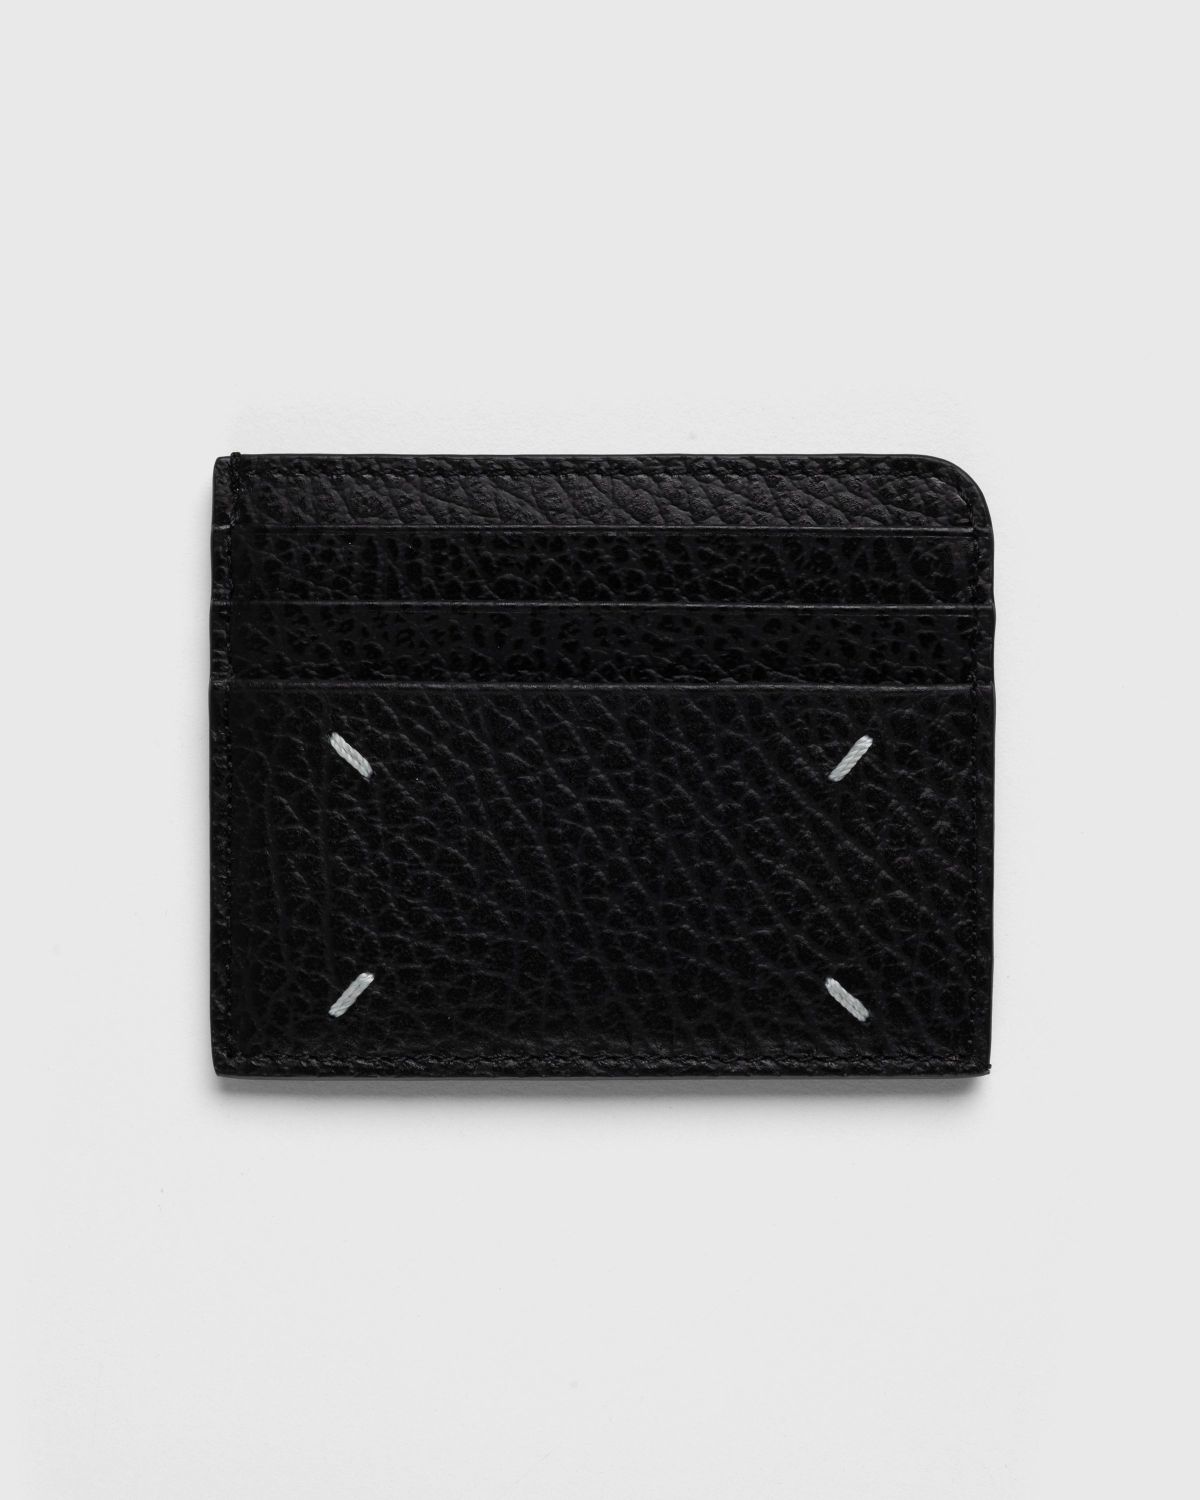 Maison Margiela – Leather Card Holder Black | Highsnobiety Shop